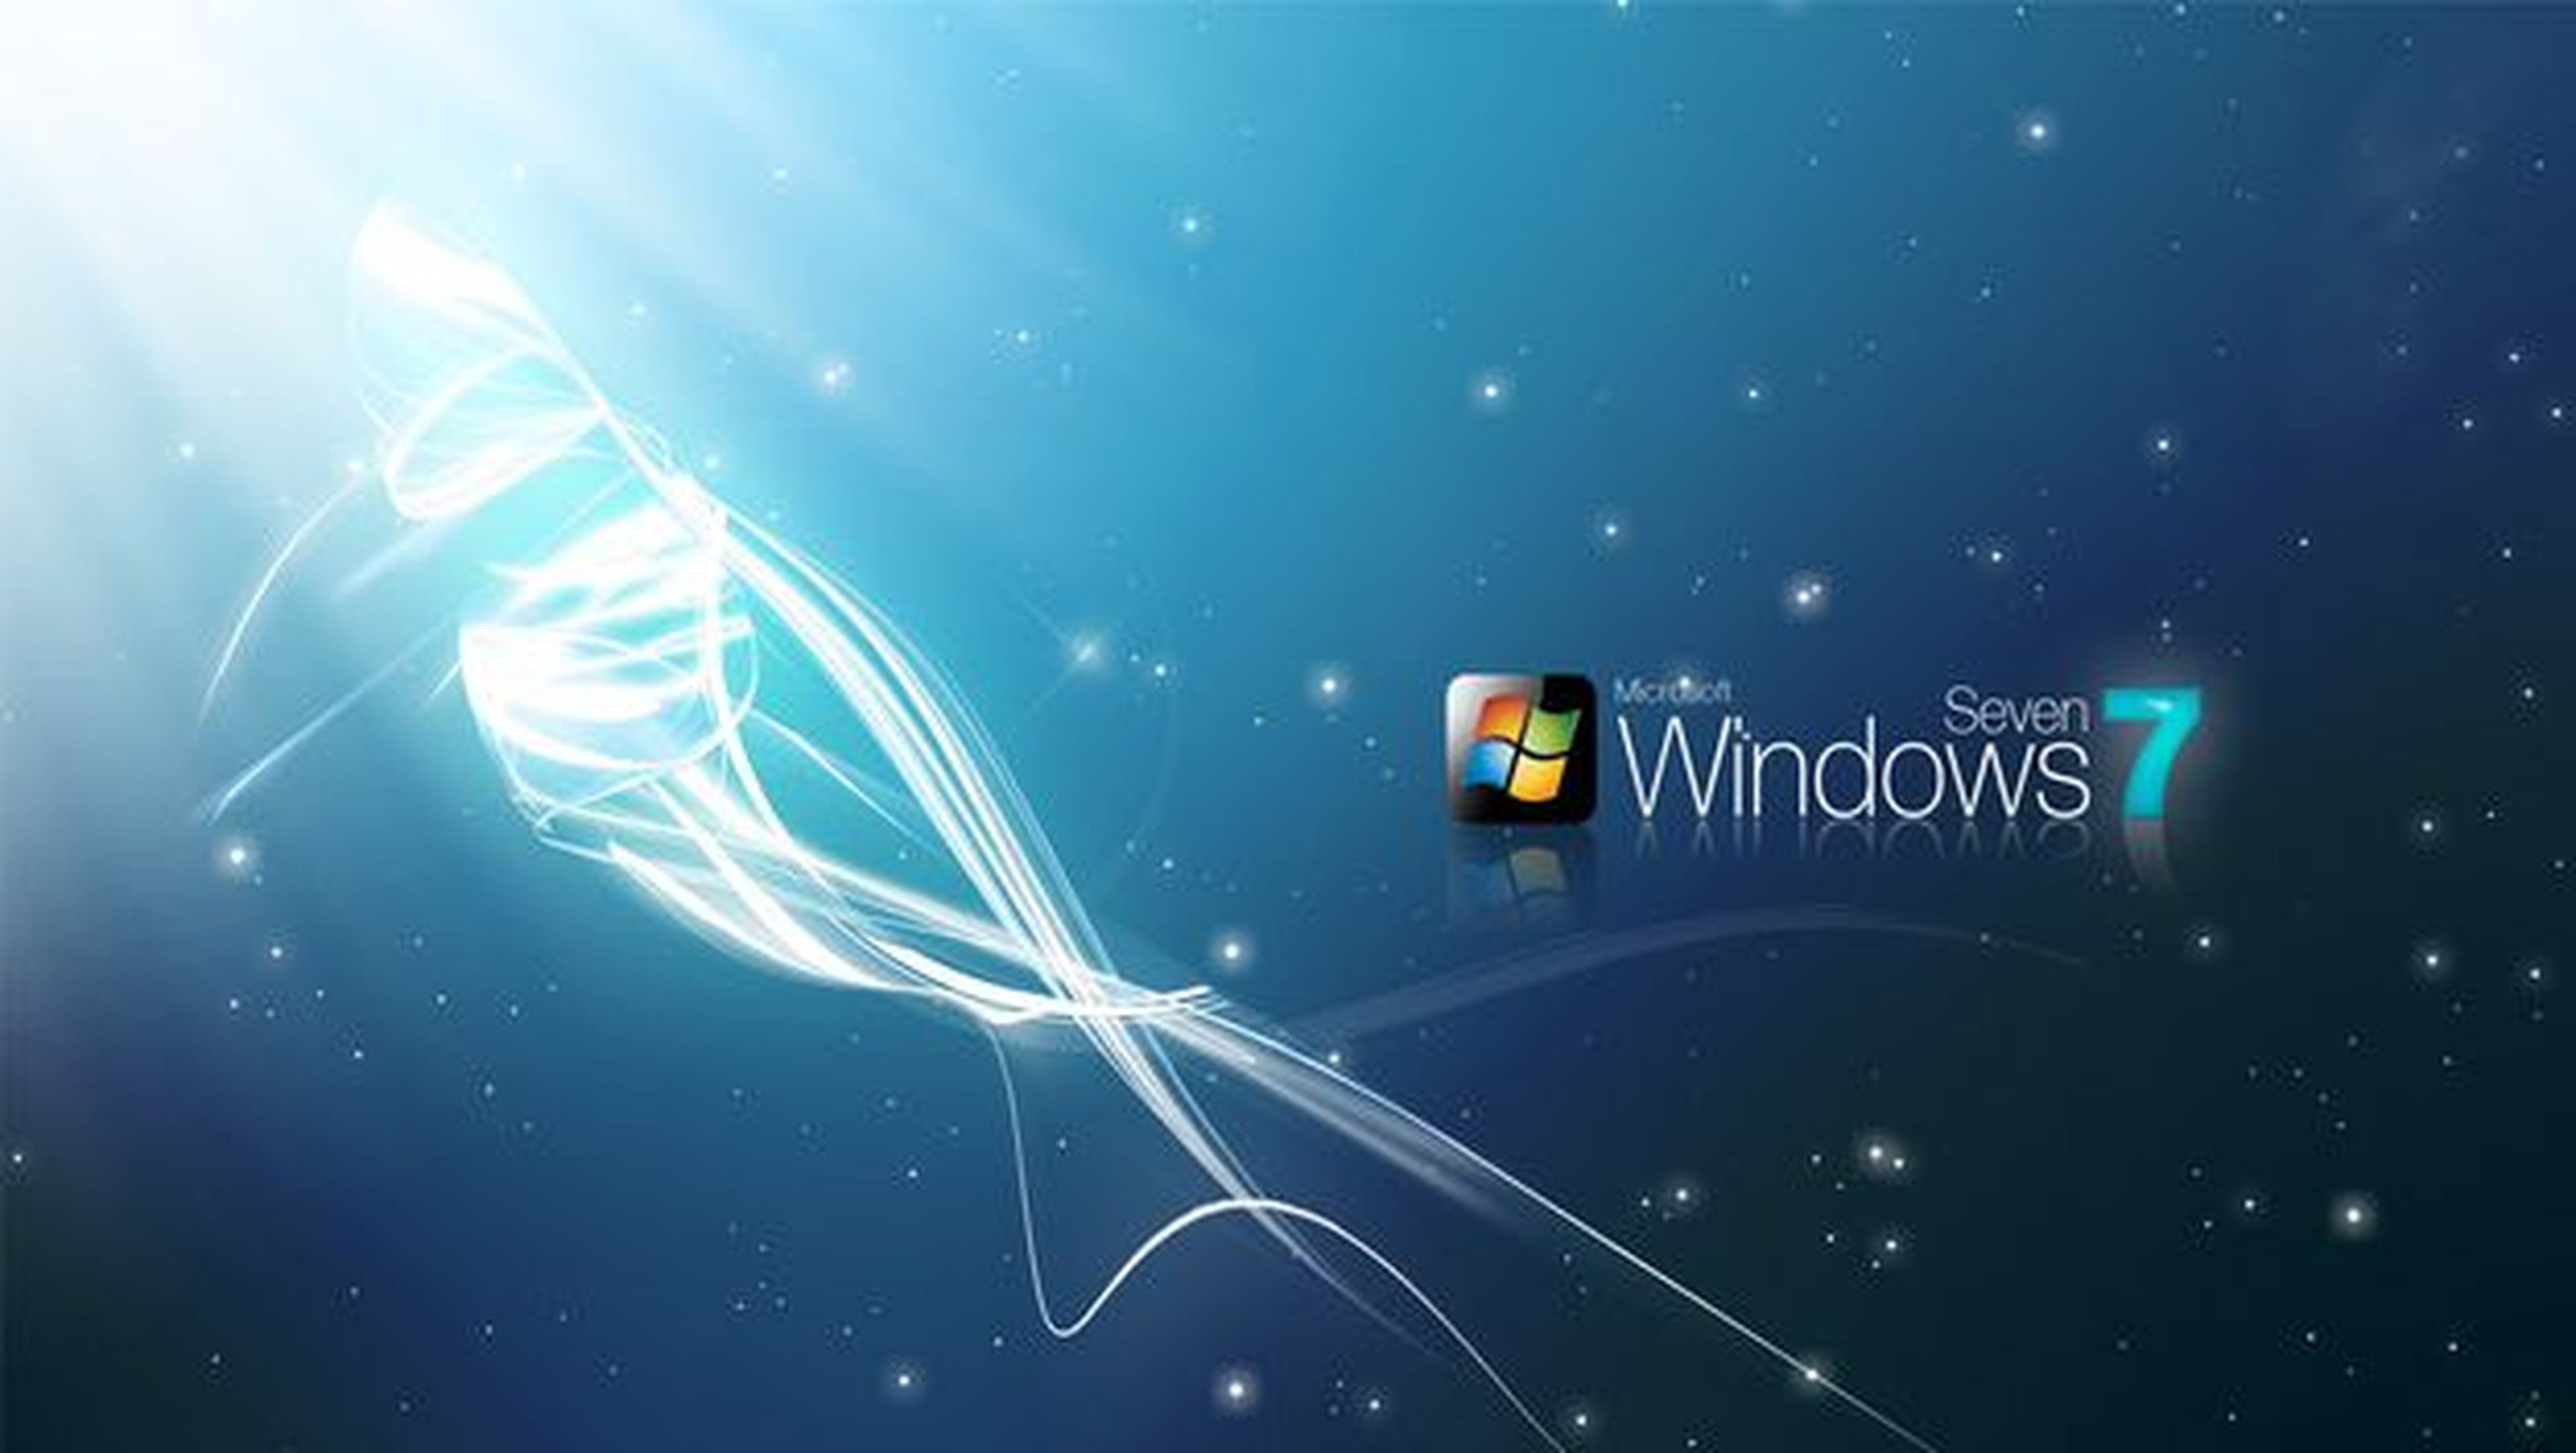 actualizacion de windows 7 a windows 10